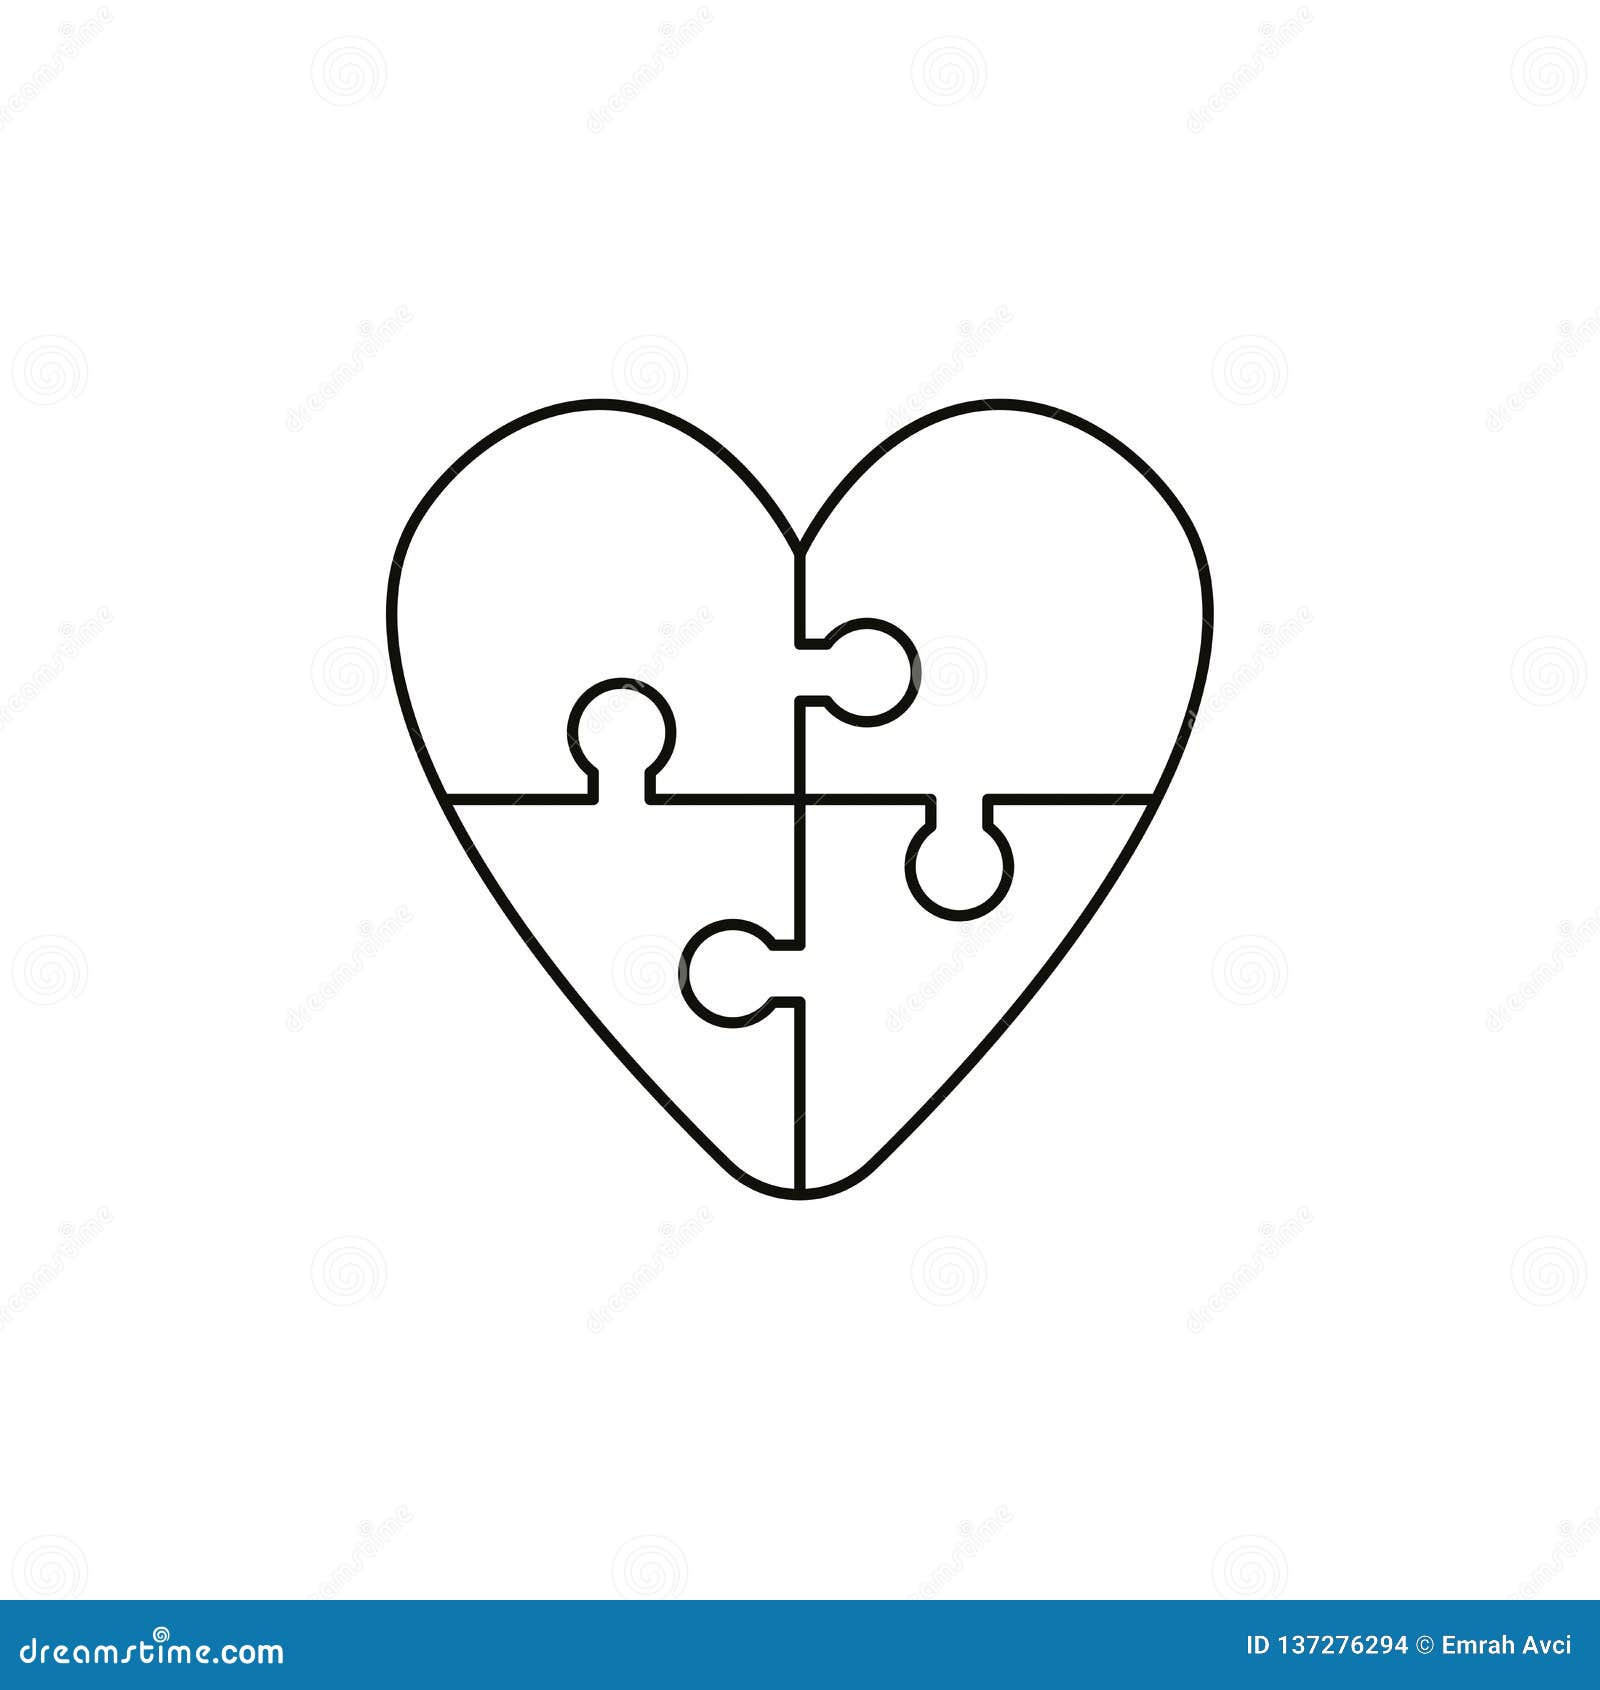 5800 Heart Puzzle Illustrations RoyaltyFree Vector Graphics  Clip Art   iStock  Heart puzzle icon Heart puzzle piece Heart puzzle illustration